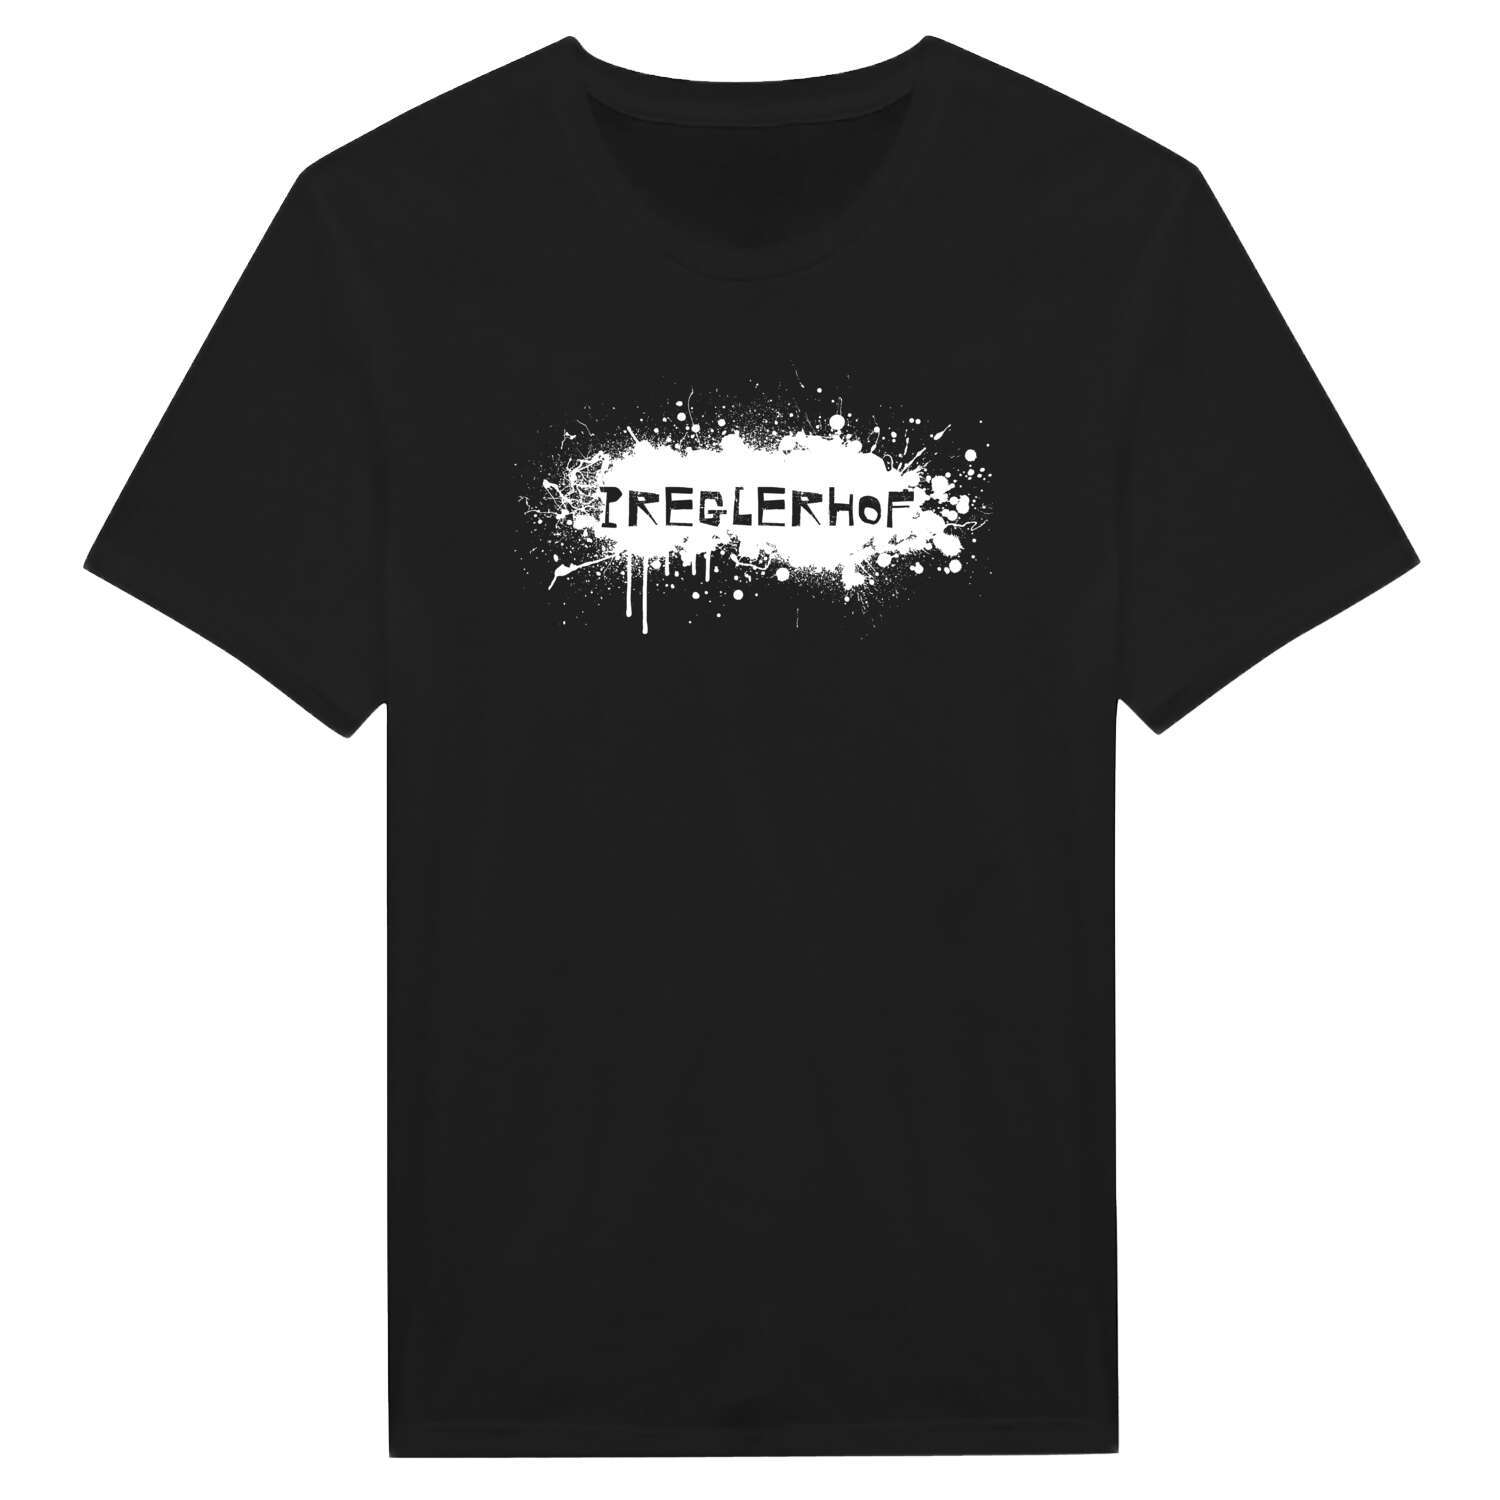 Preglerhof T-Shirt »Paint Splash Punk«